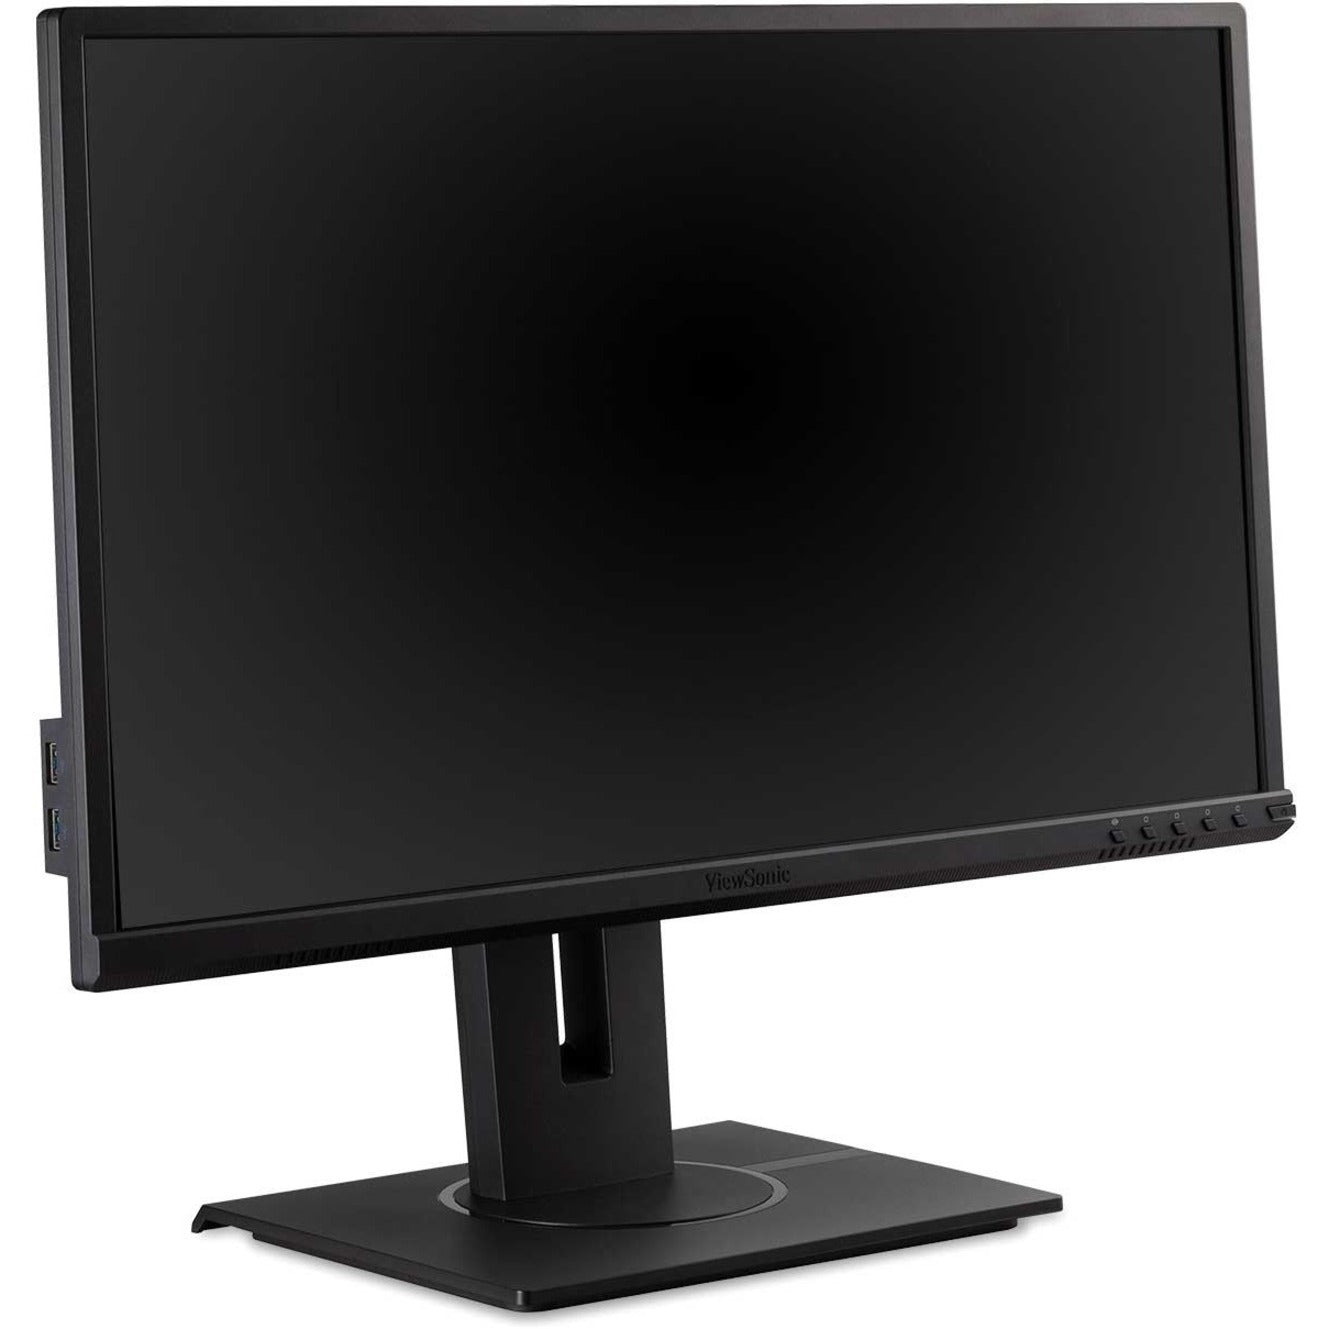 ViewSonic VG2440 24" LCD Monitor, 1920x1080, HDMI, DP, VGA, USB-hub